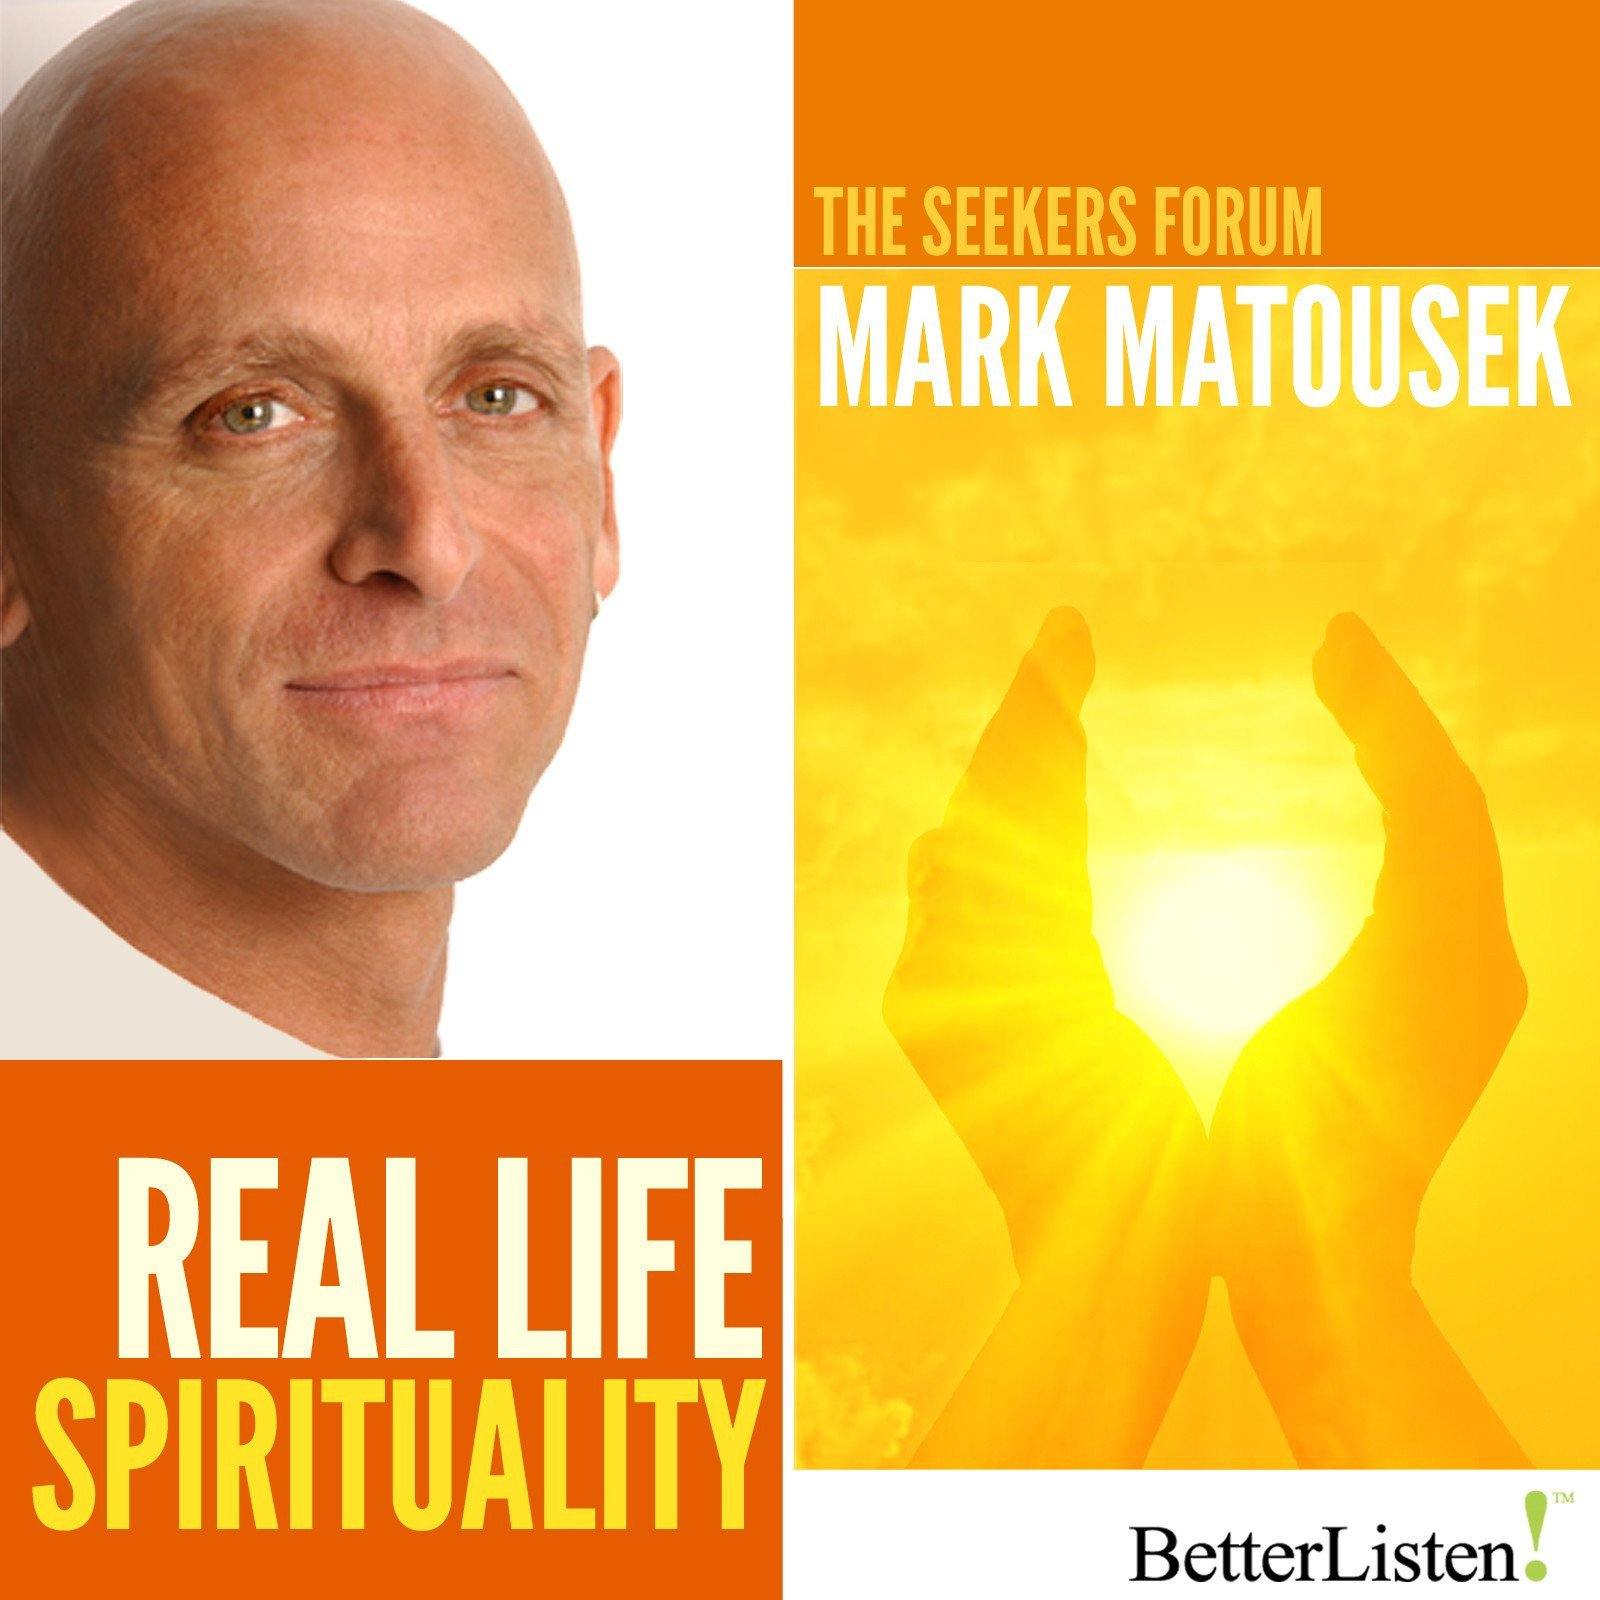 Real Life Spirituality with Mark Matousek Audio Program BetterListen! - BetterListen!